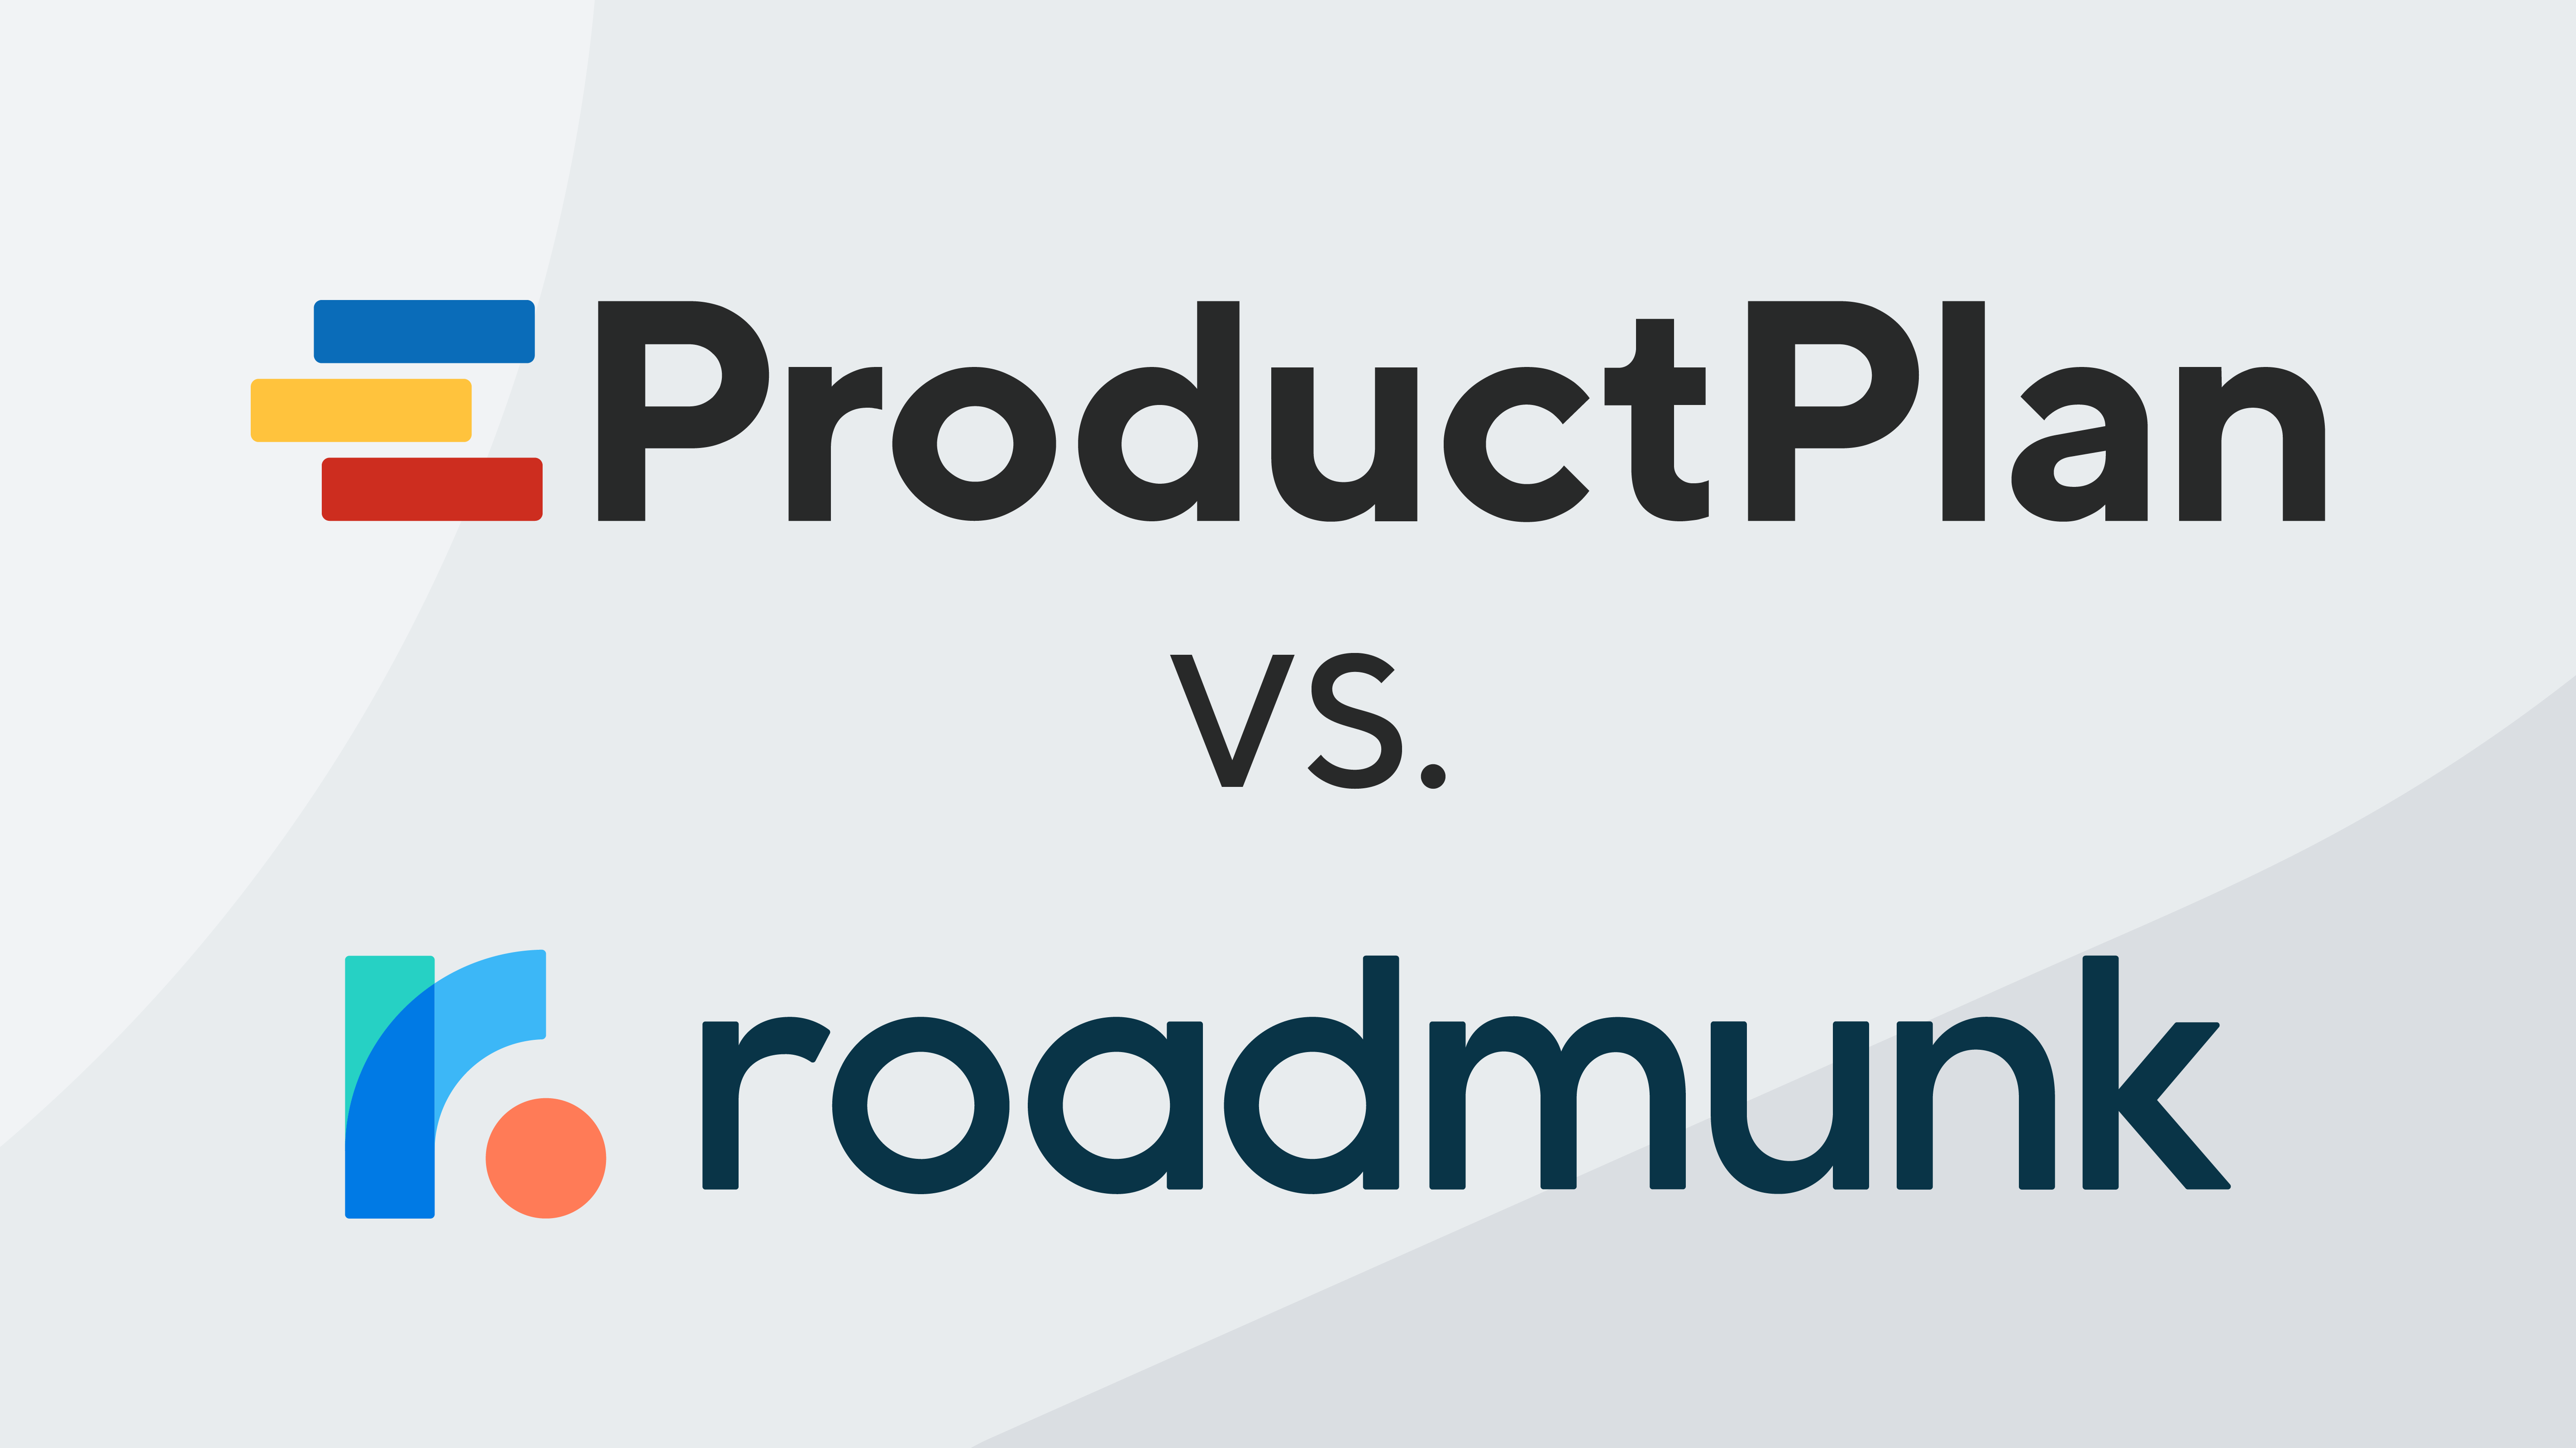 ProductPlan vs Roadmunk